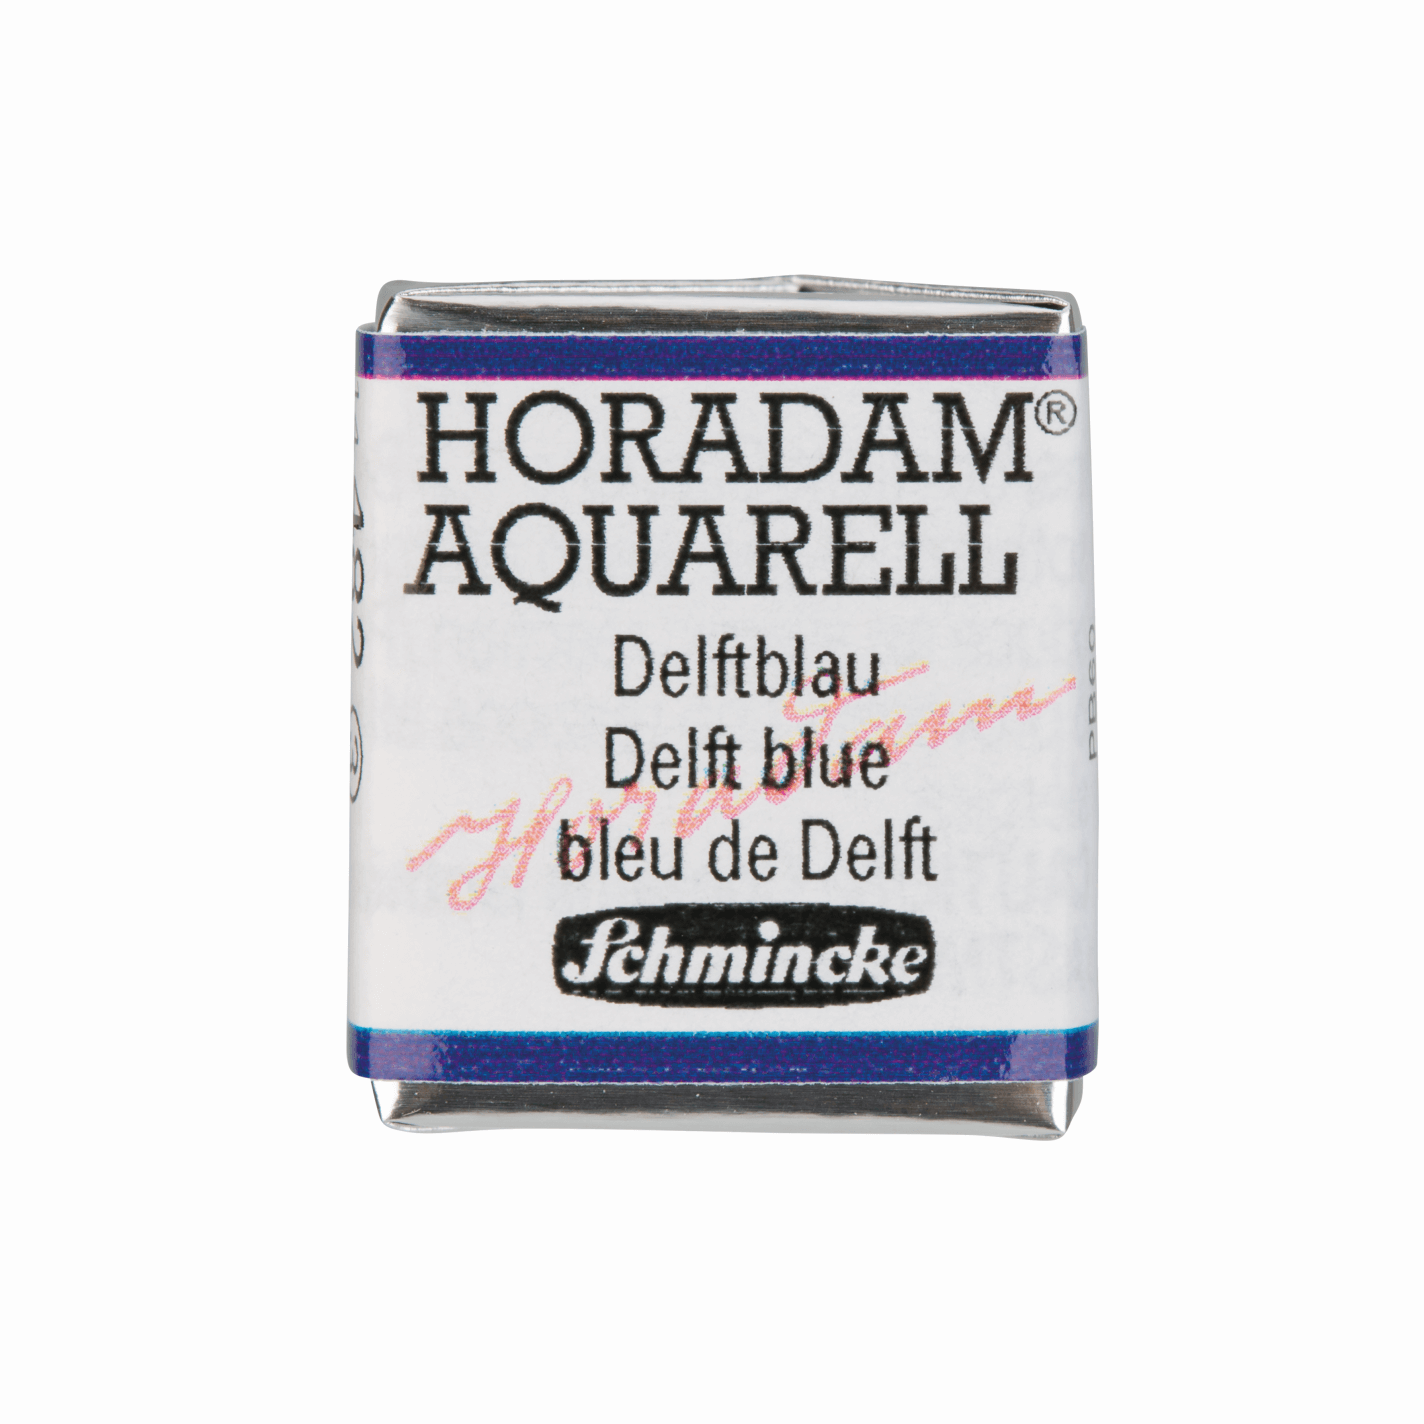 Schmincke Horadam Aquarell pans 1/2 pan Delft Blue